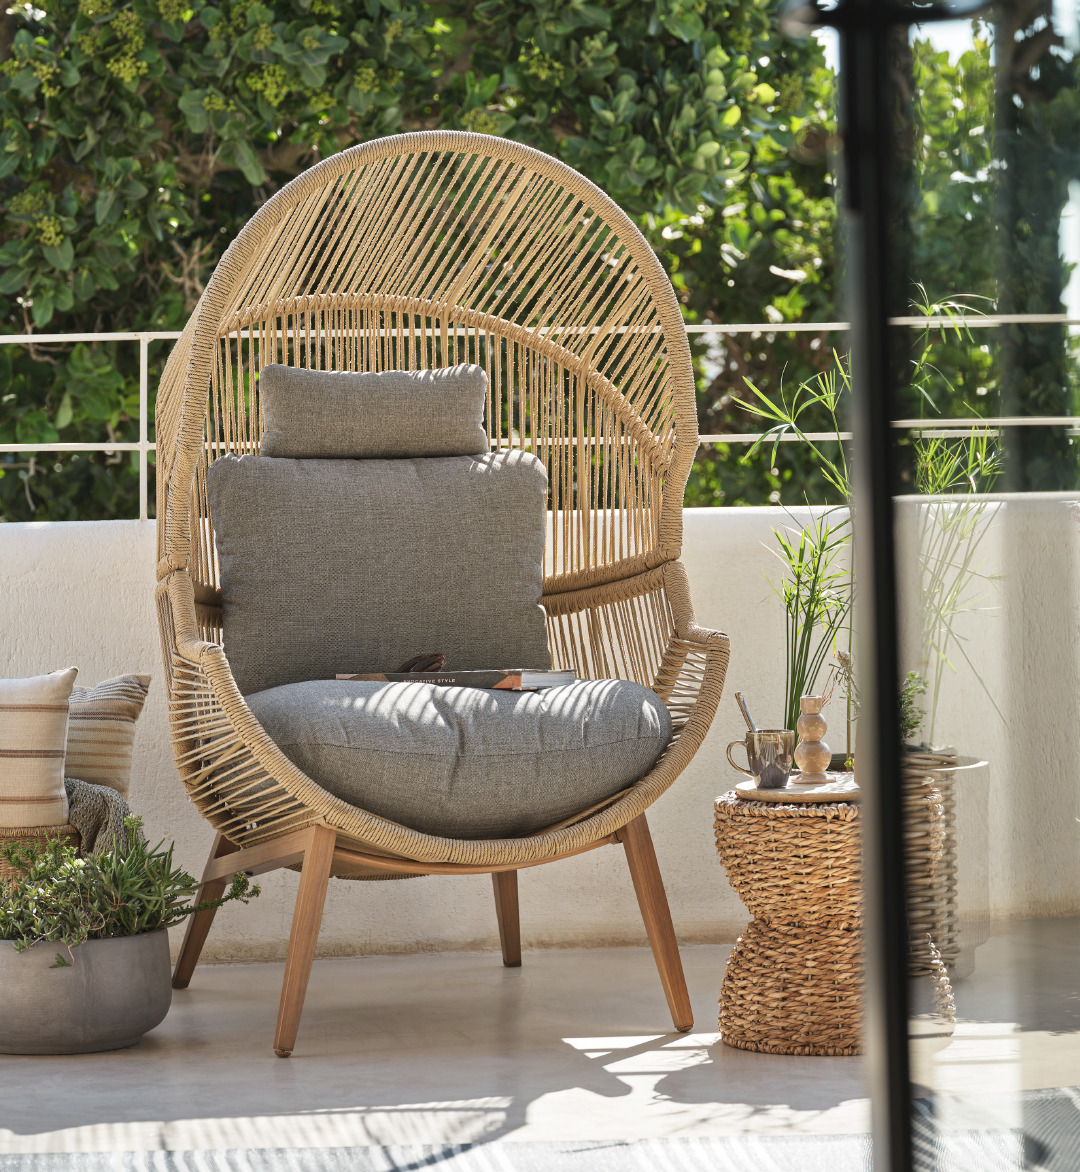 Hyggekrog på terrassen med loungestol HALVREBENE, planter i havekrukker og kaffe på piedestal PILFINK